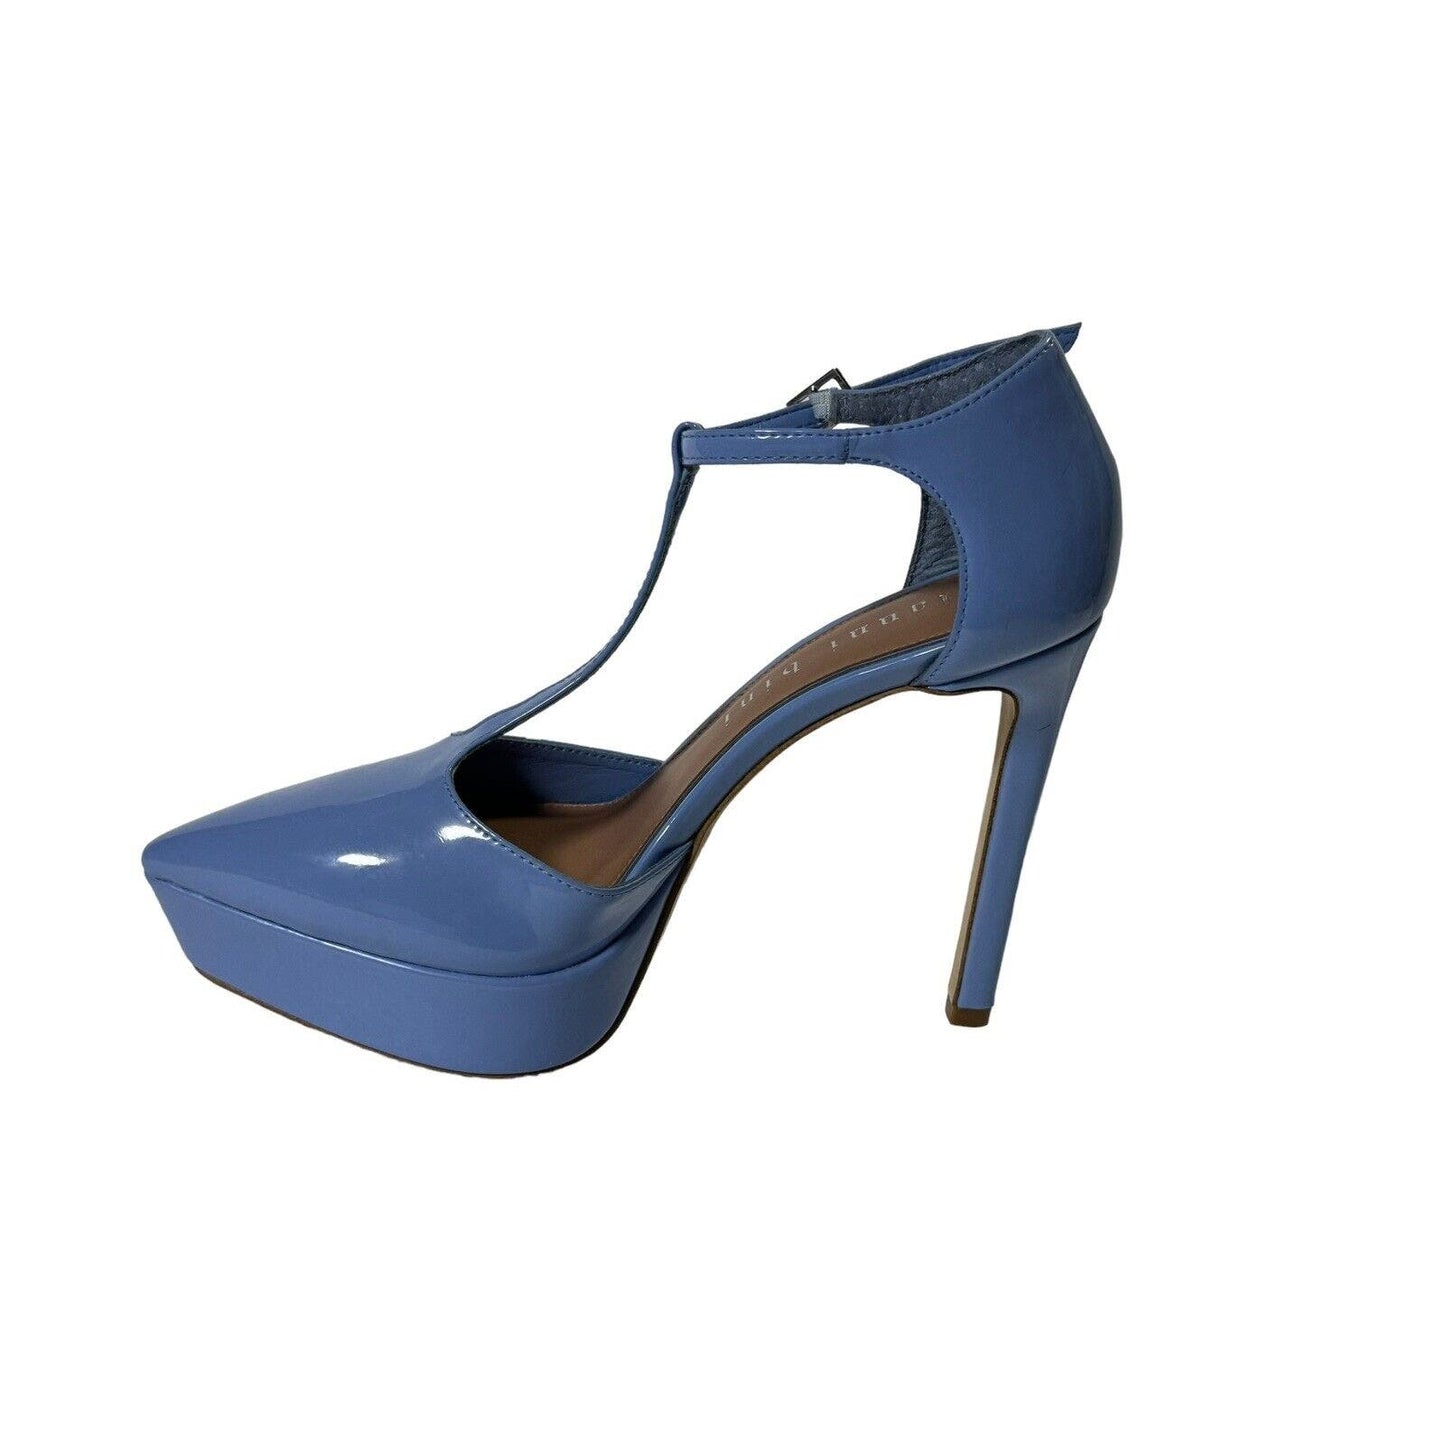 Gianni Bini Blainee Patent Platform T Strap Heels Size 8.5 M